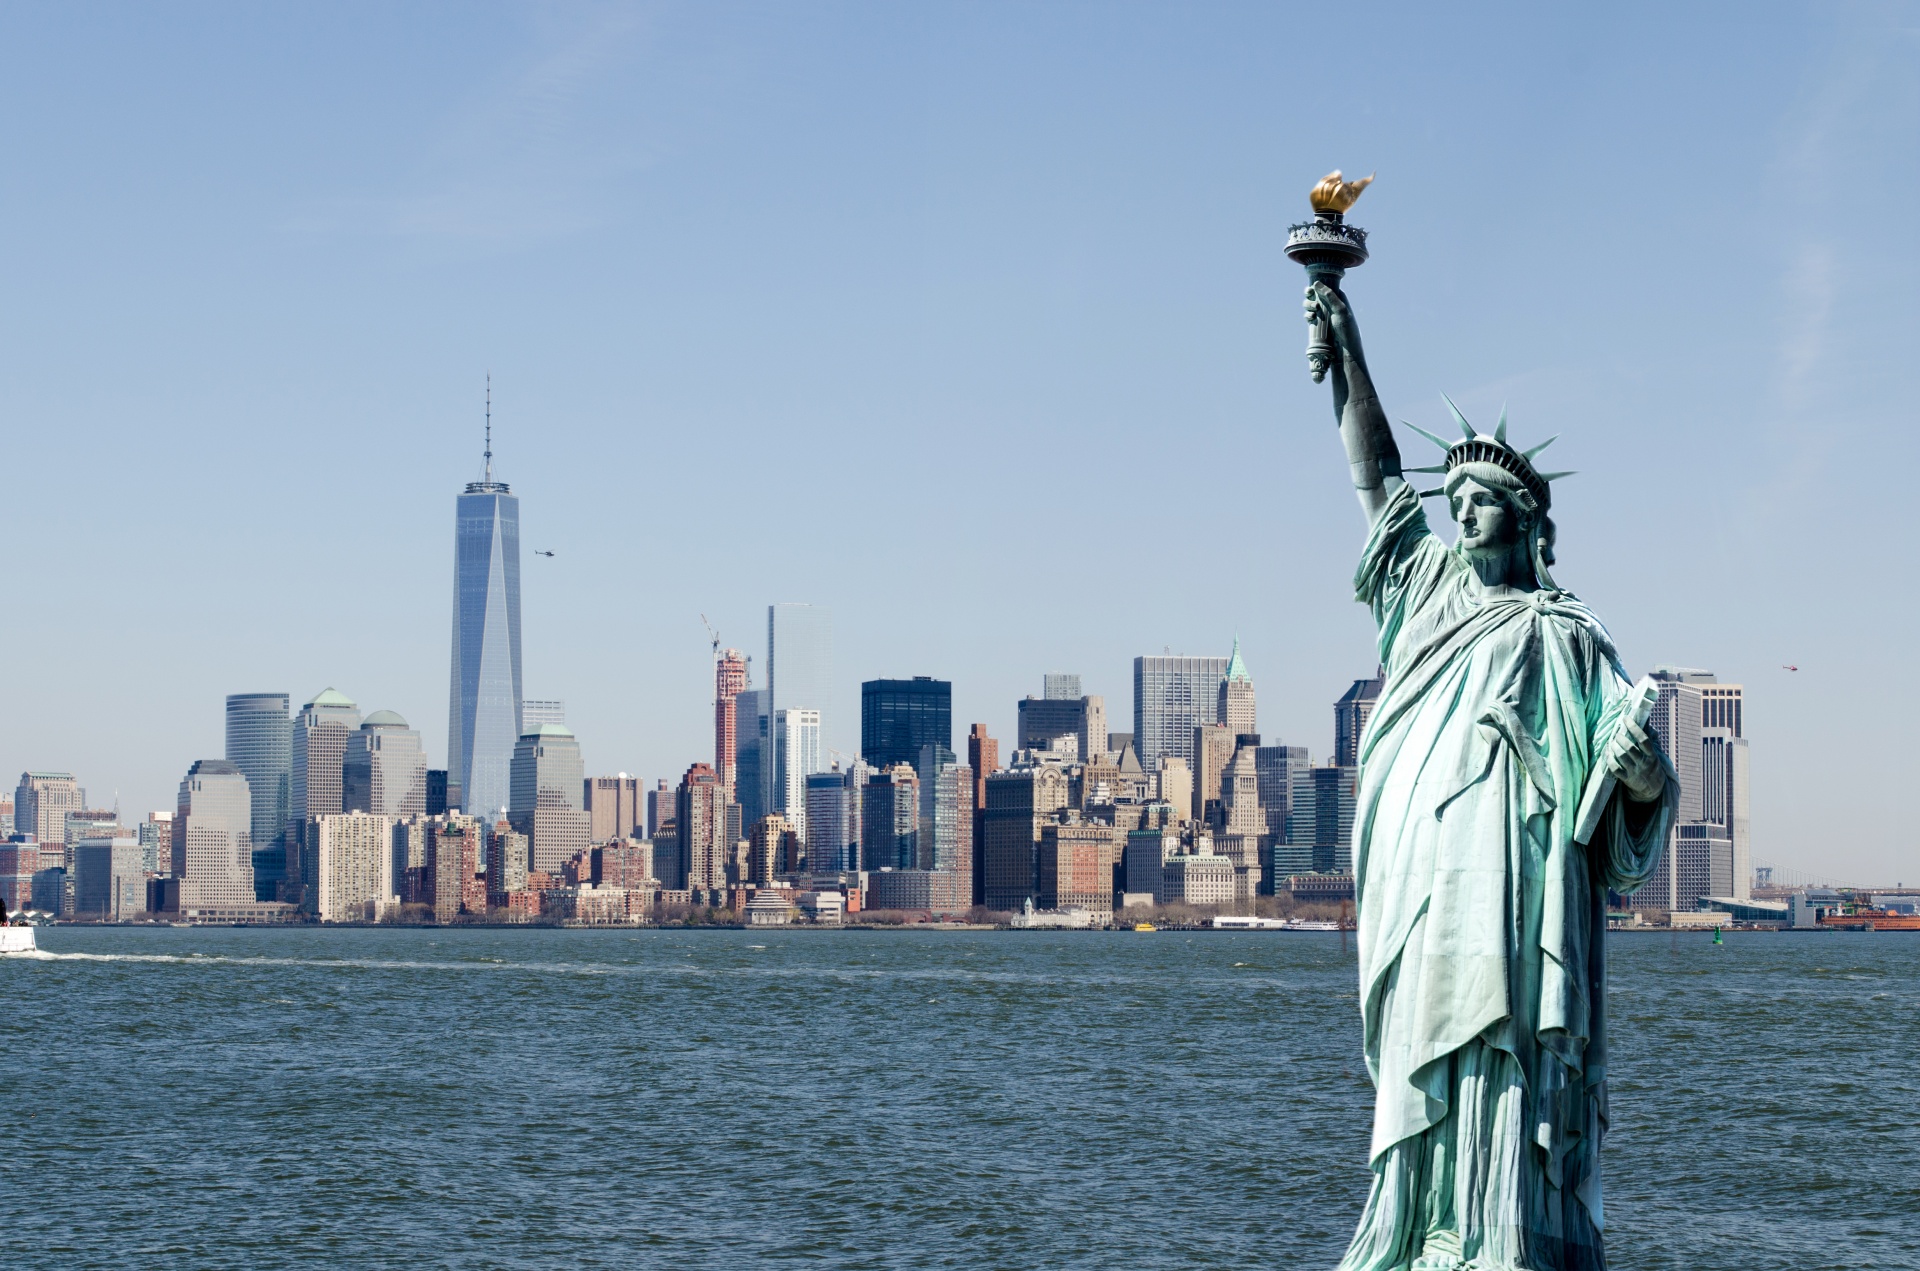 Destination NYC & statue of liberty